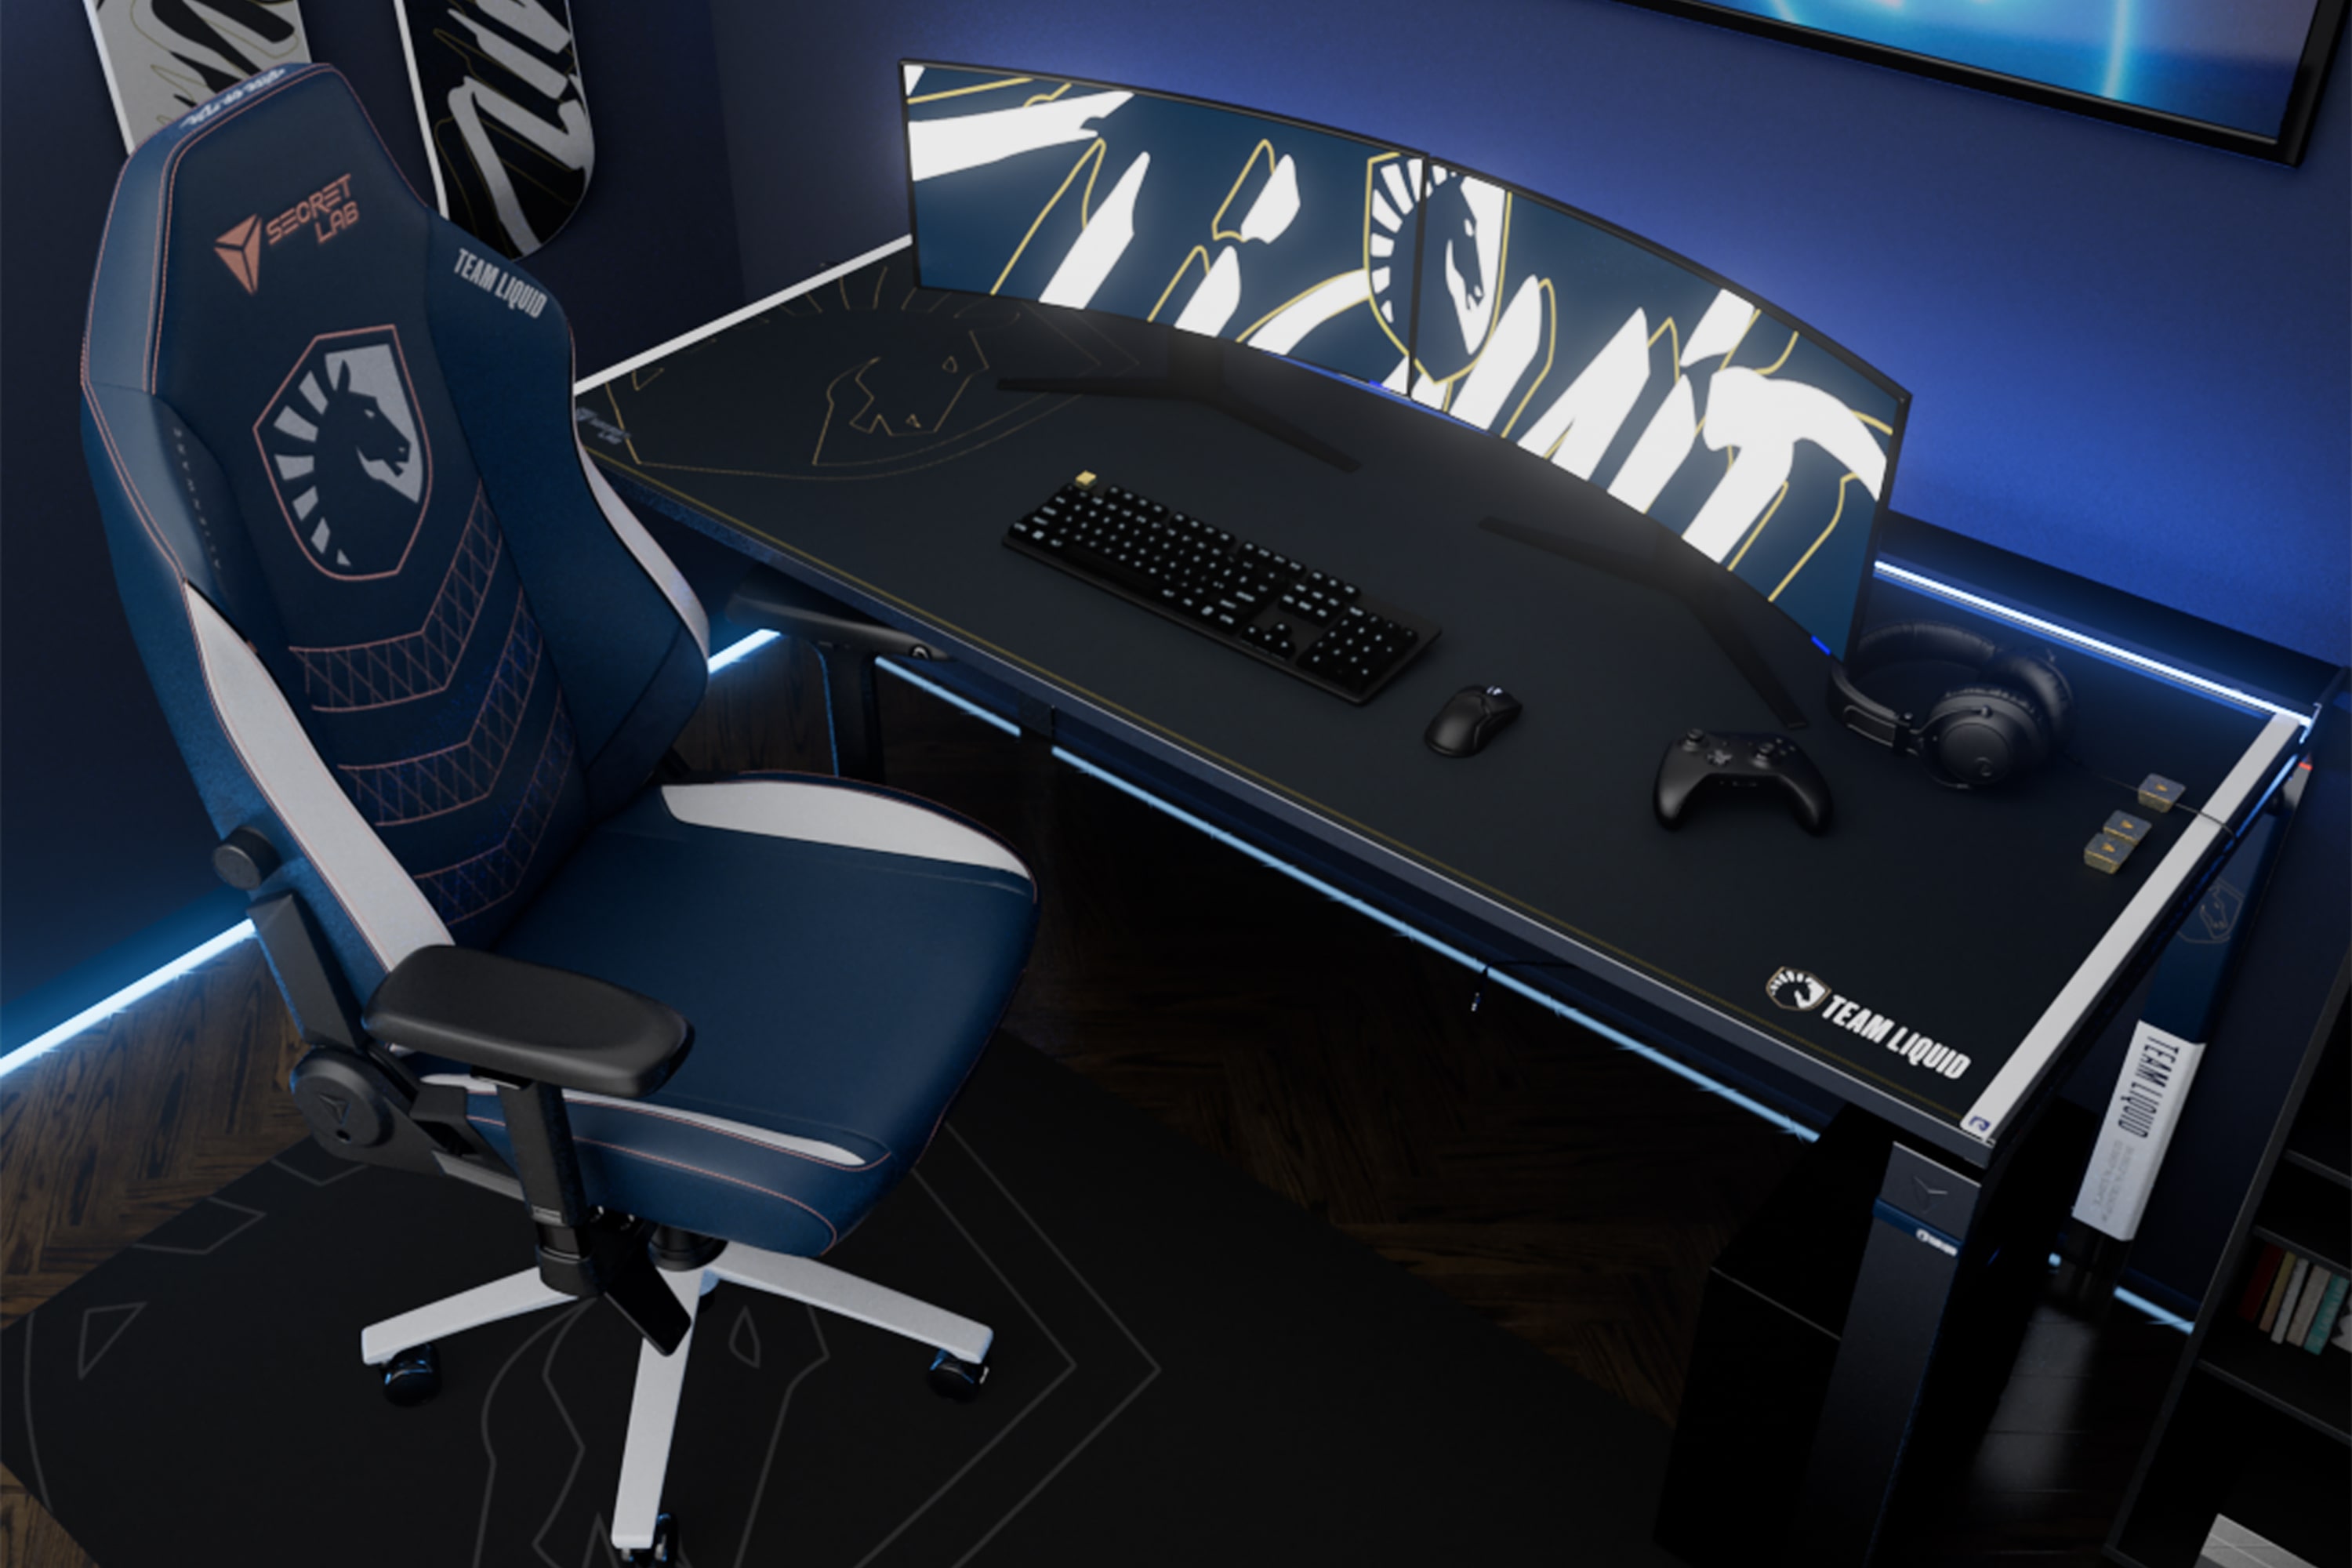 Team Liquid x Secretlab gaming chair